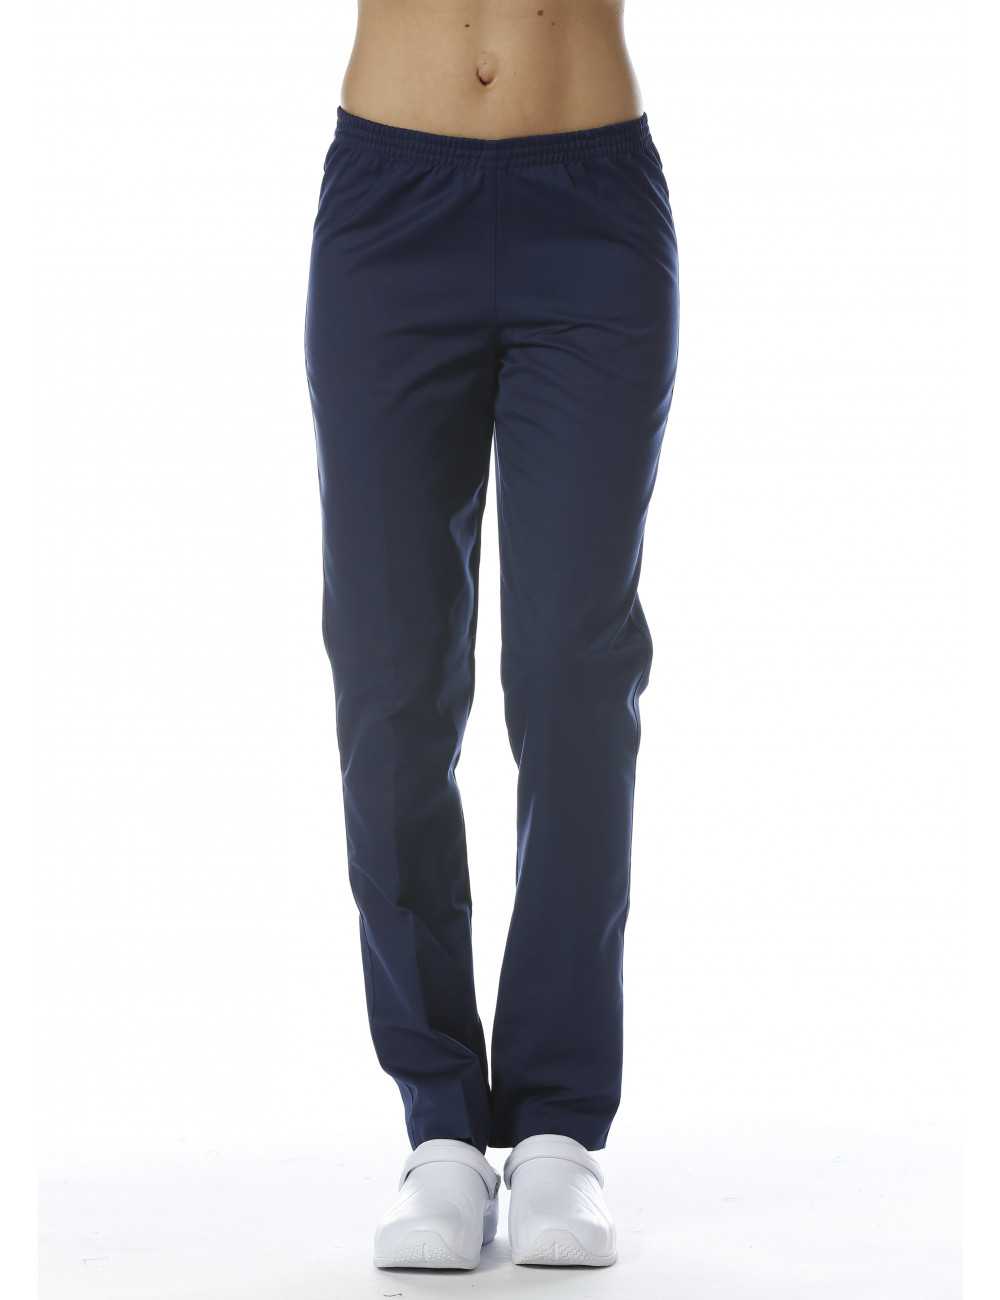 Grey Medical Pants, Unisex, Elastic waistband, Camille Lavandie (078VGR)